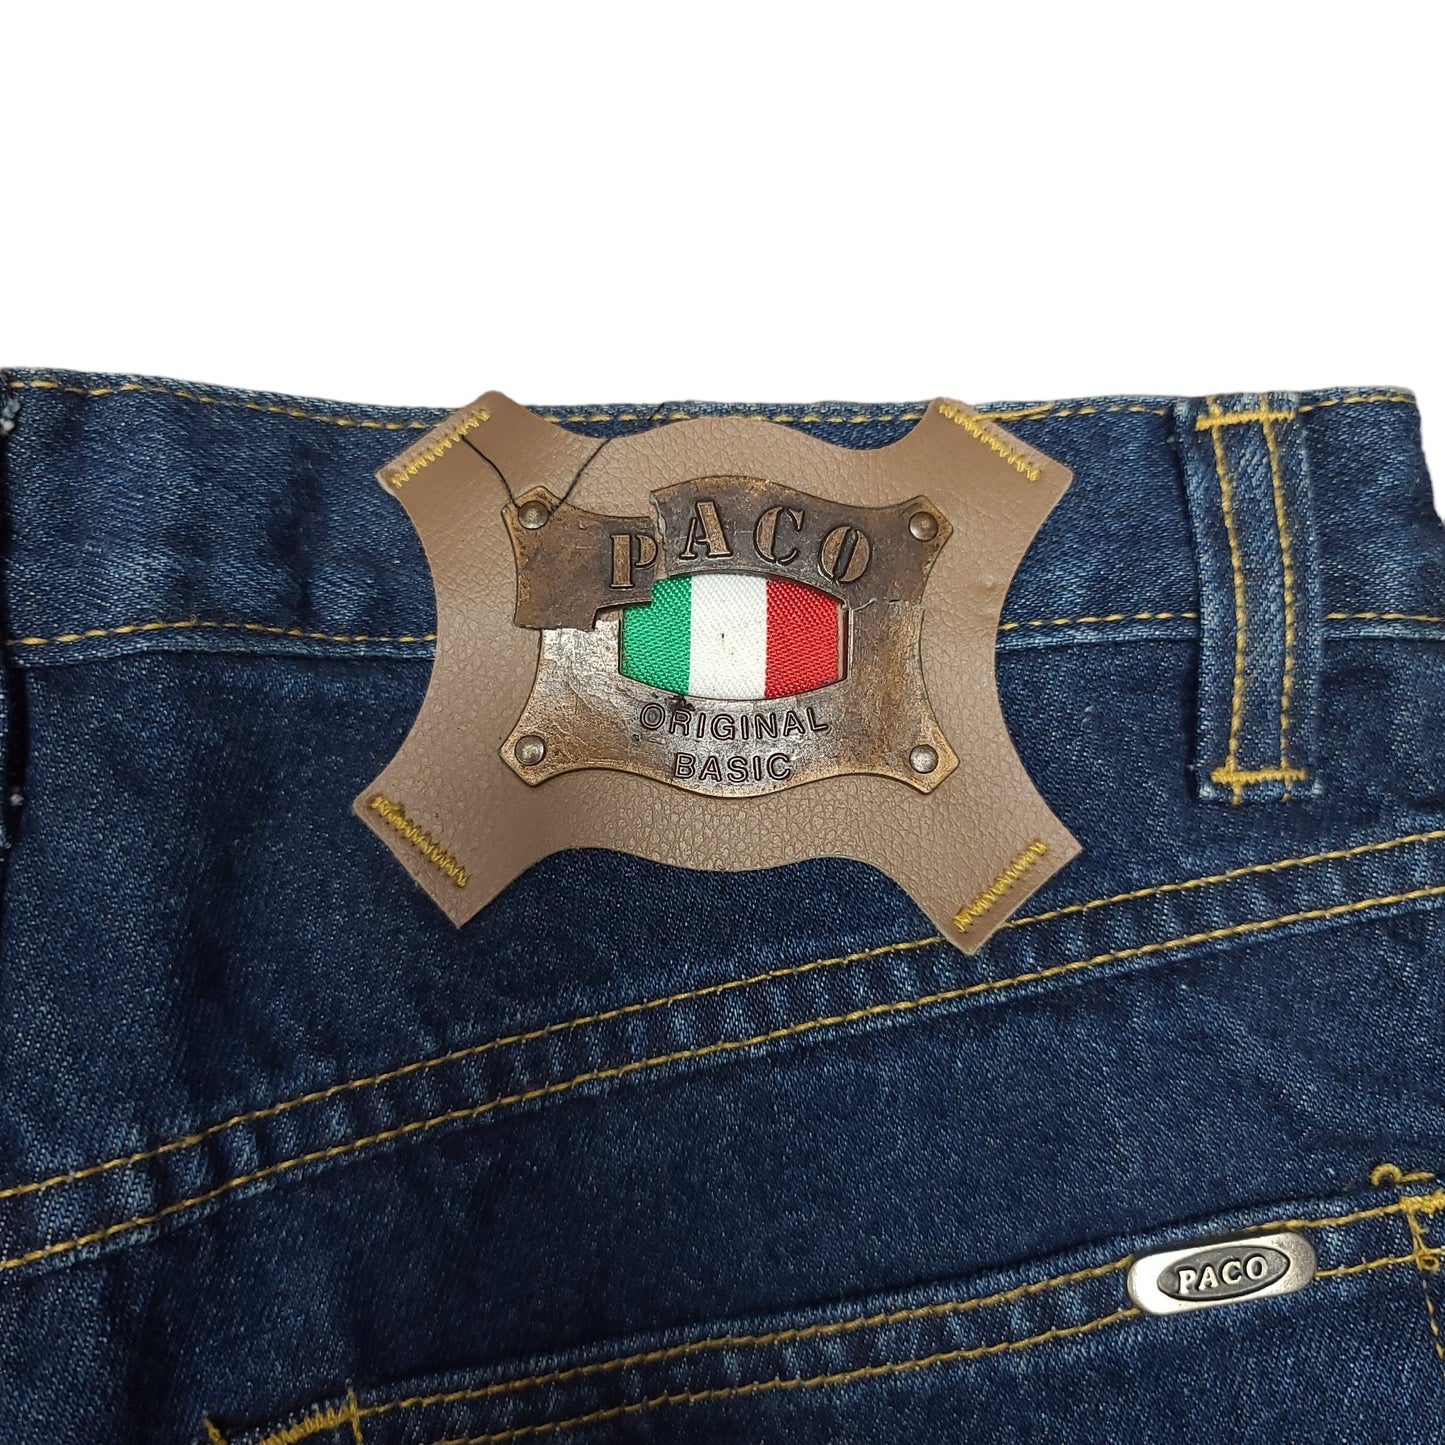 Vintage Y2K Mexico Buckle Denim Paco Jeans